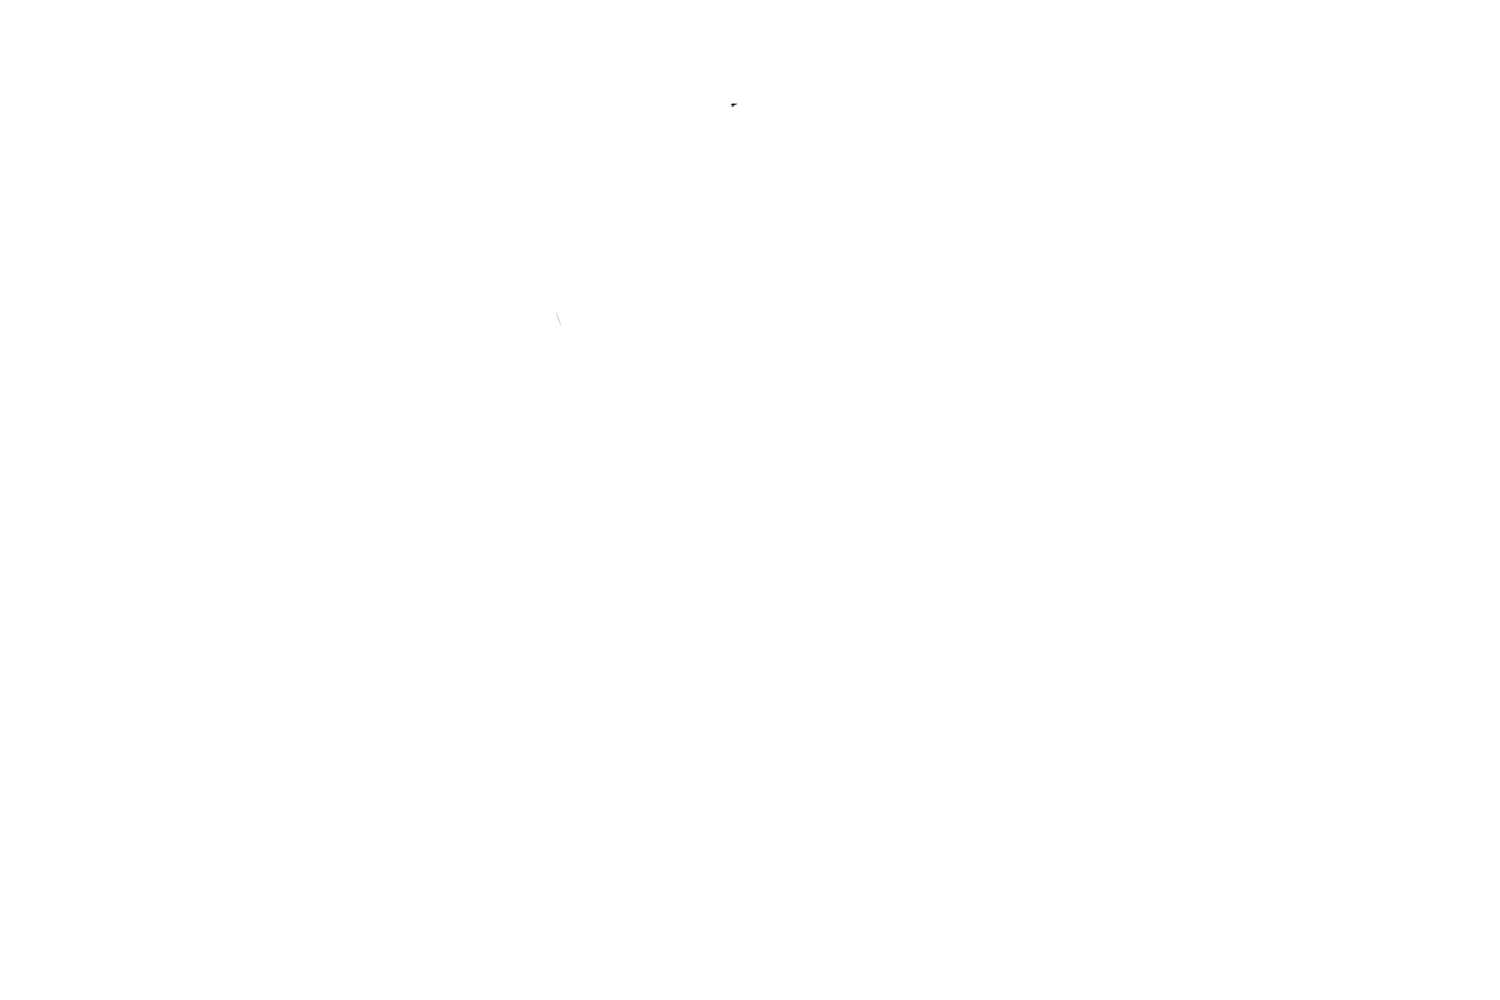 Lotus Park Films